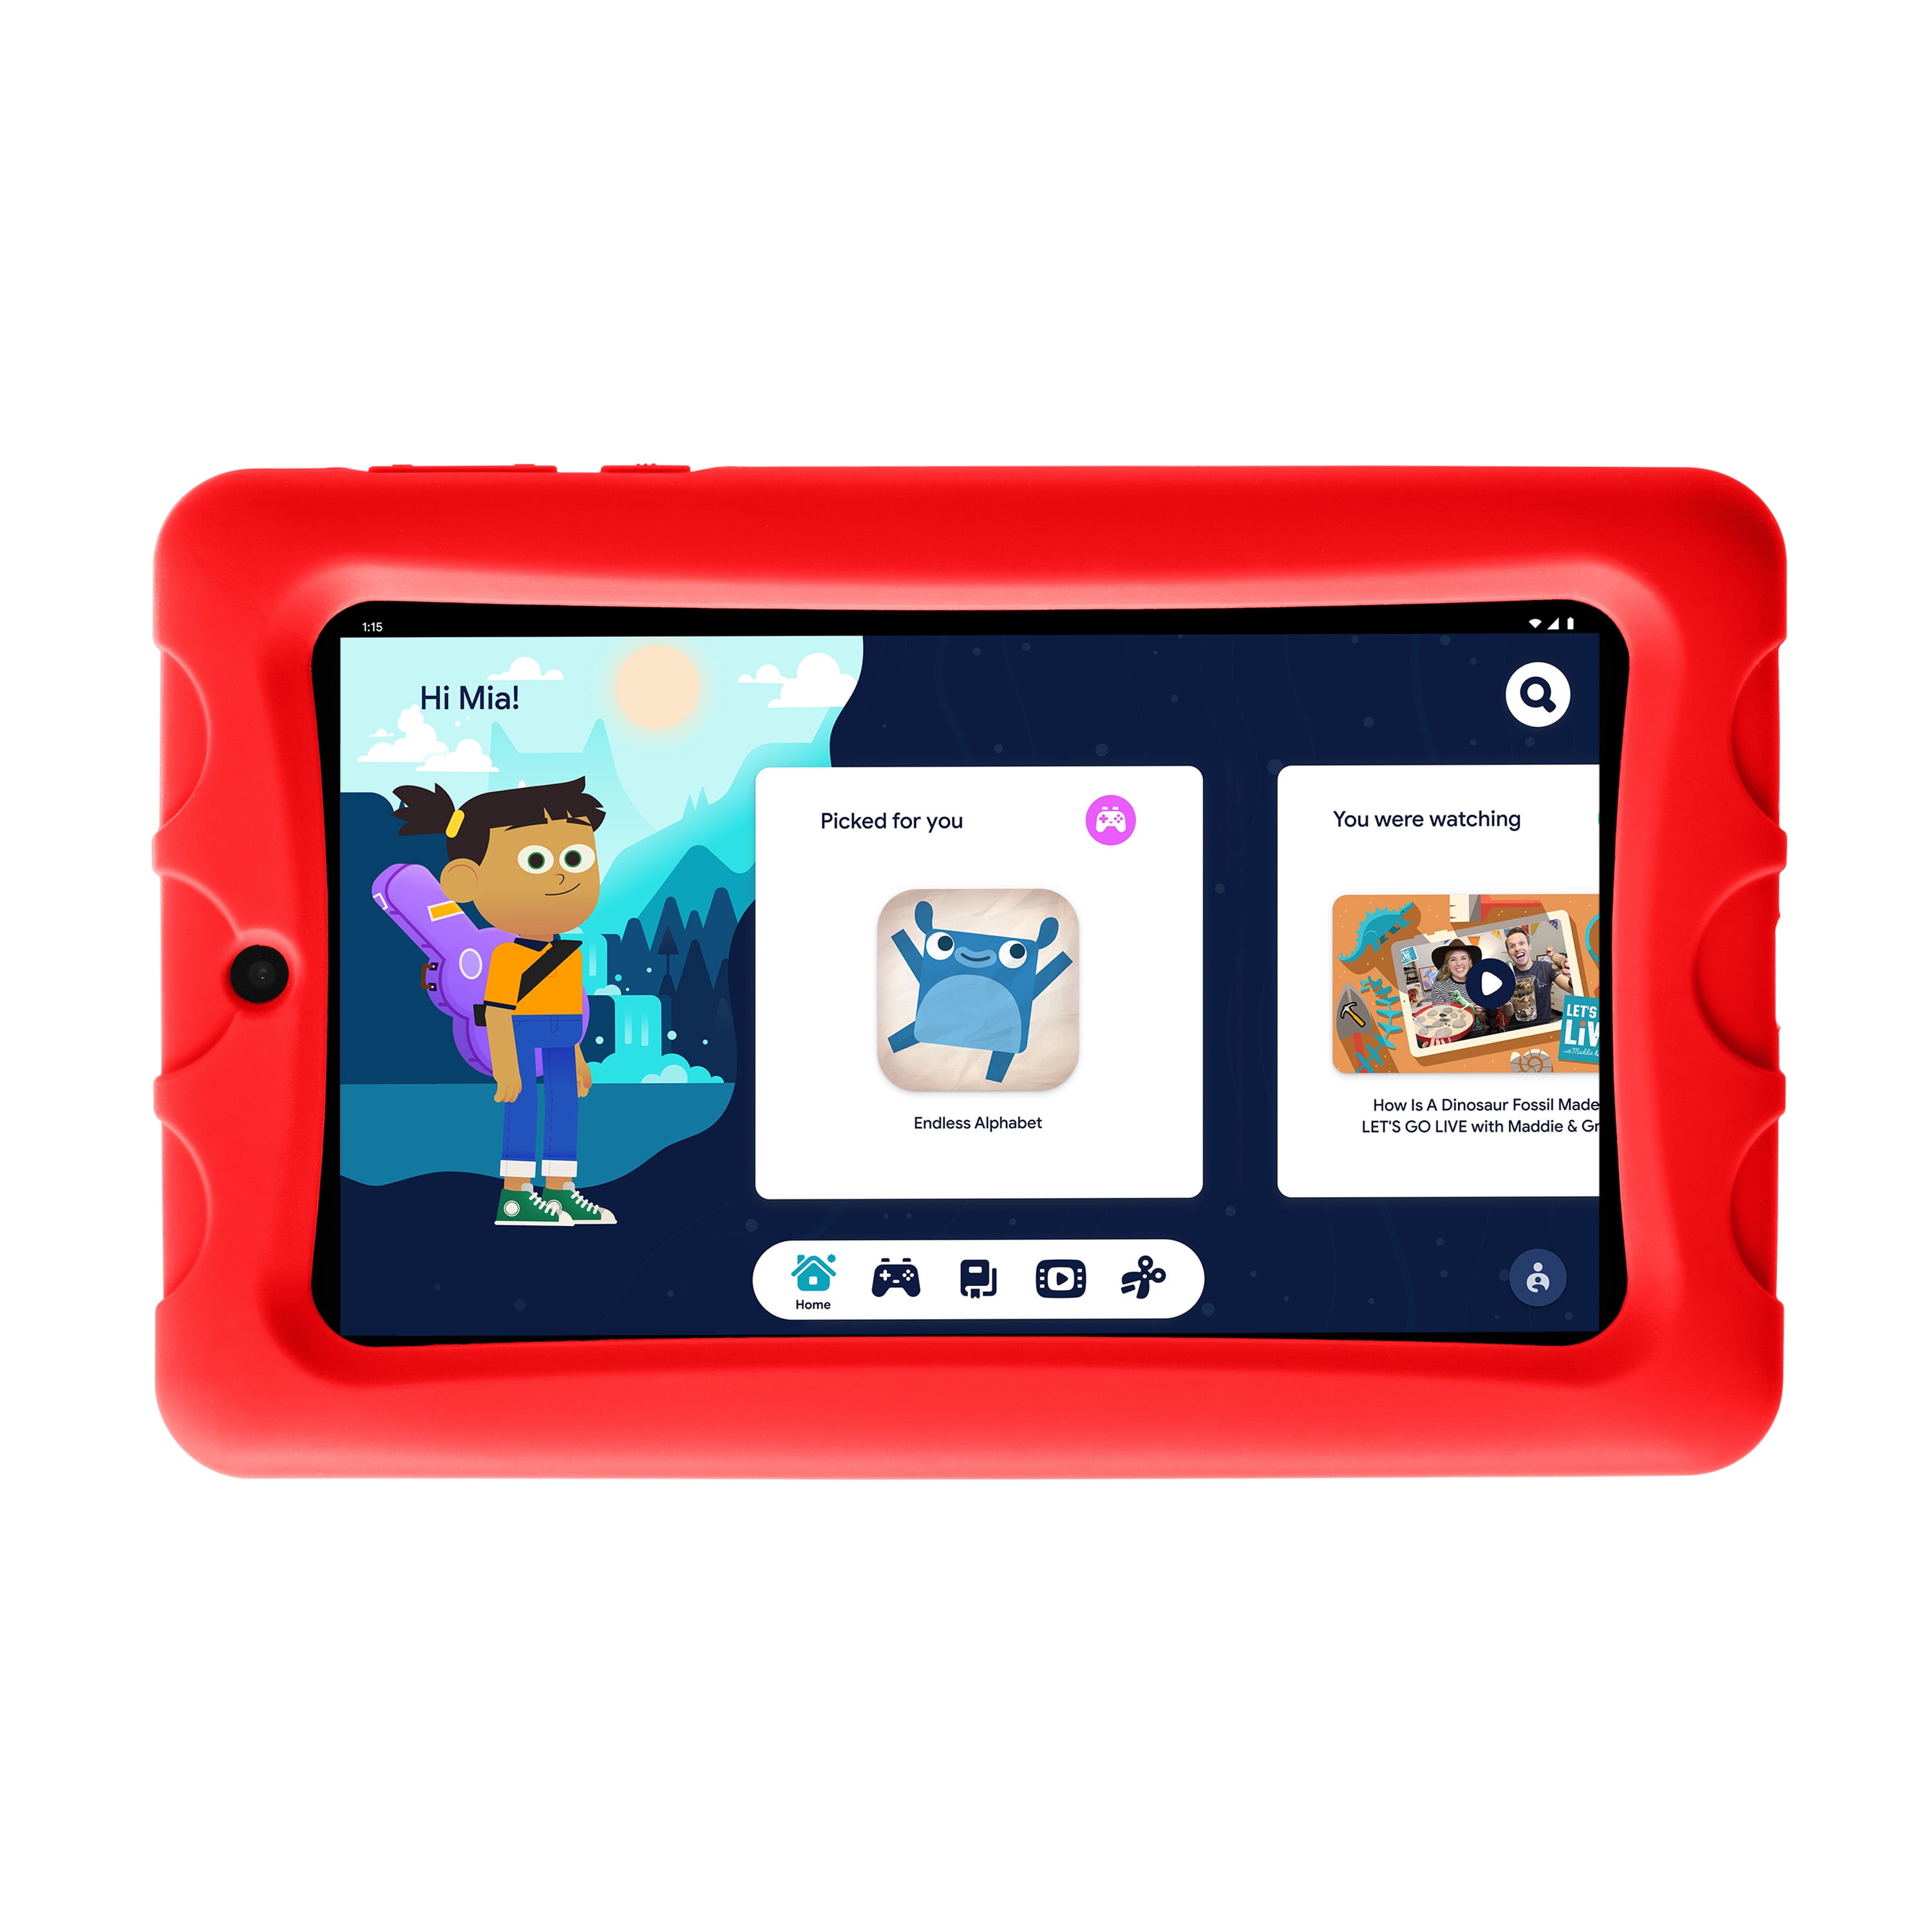 Unieuro - I-INN KID PLAY 7 ORANGE Tablet per bambini - Modalità